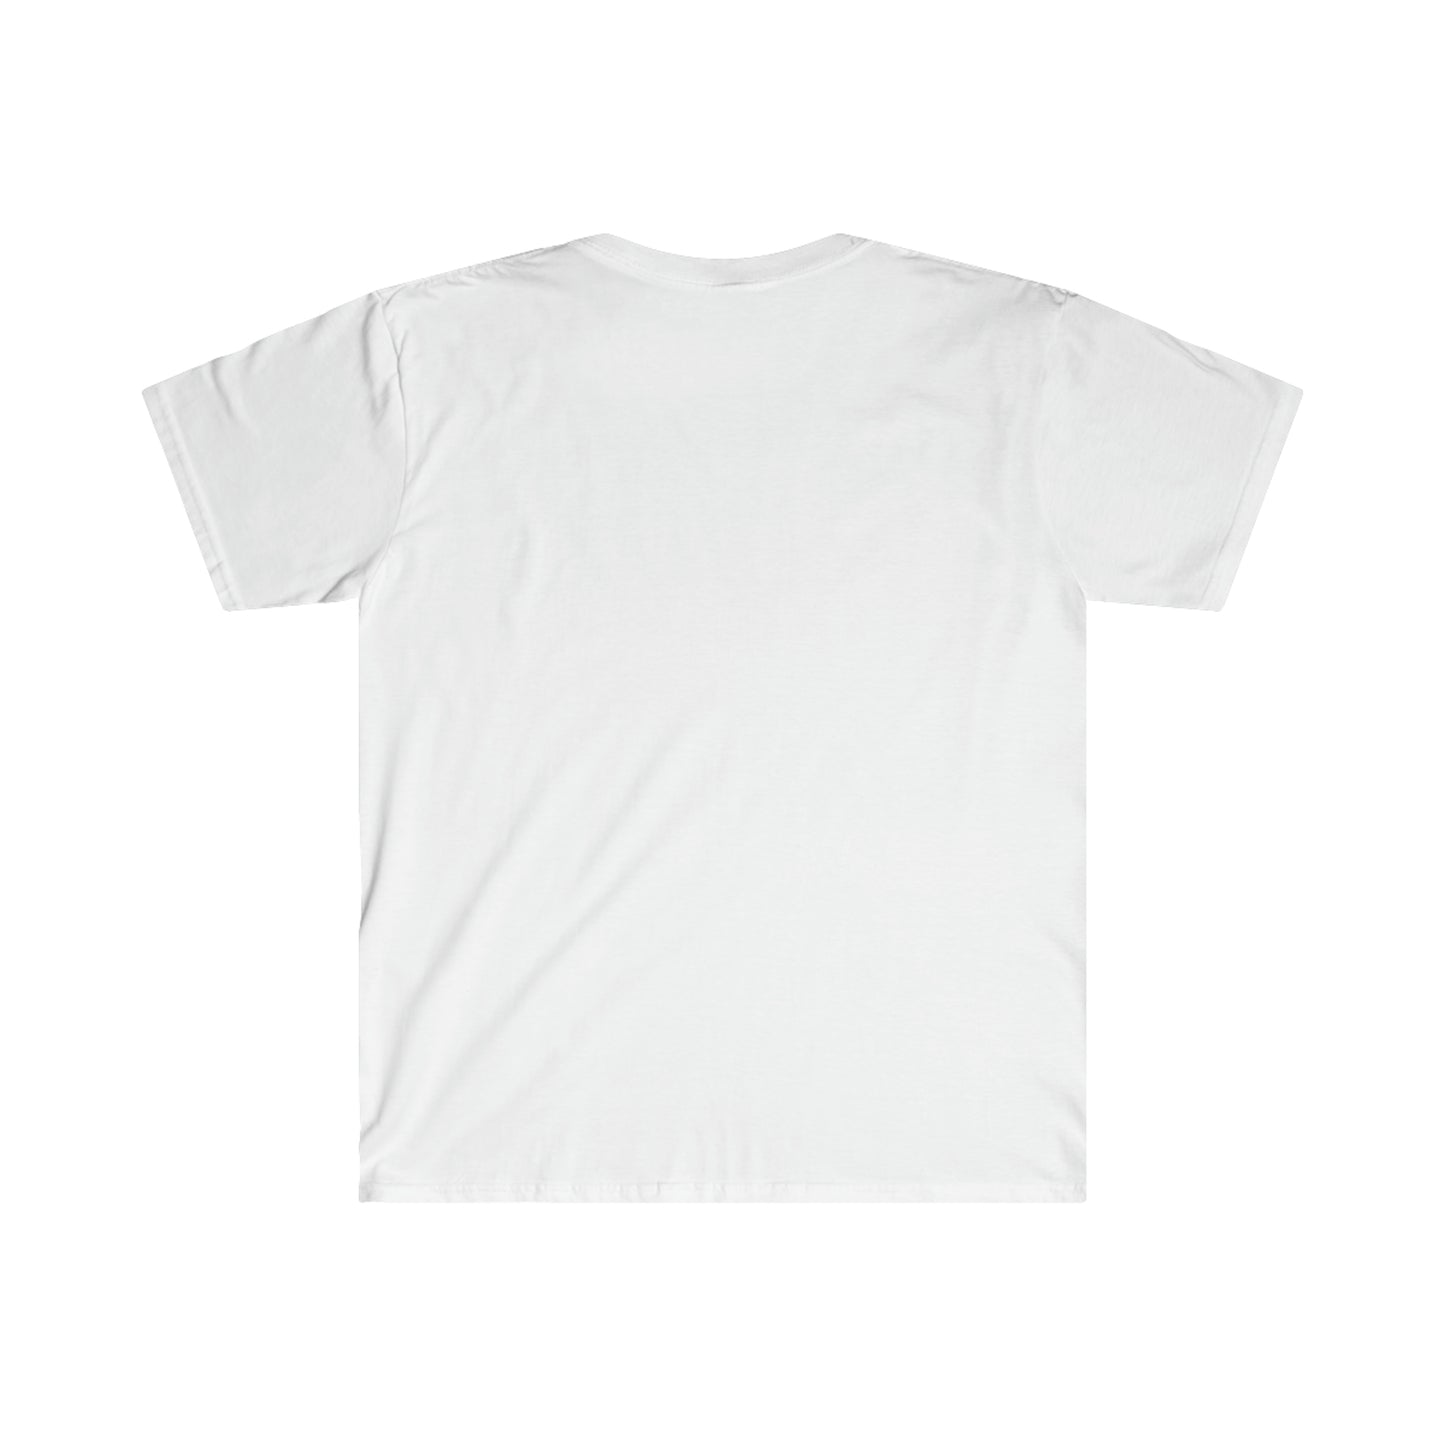 Resiste T-Shirt